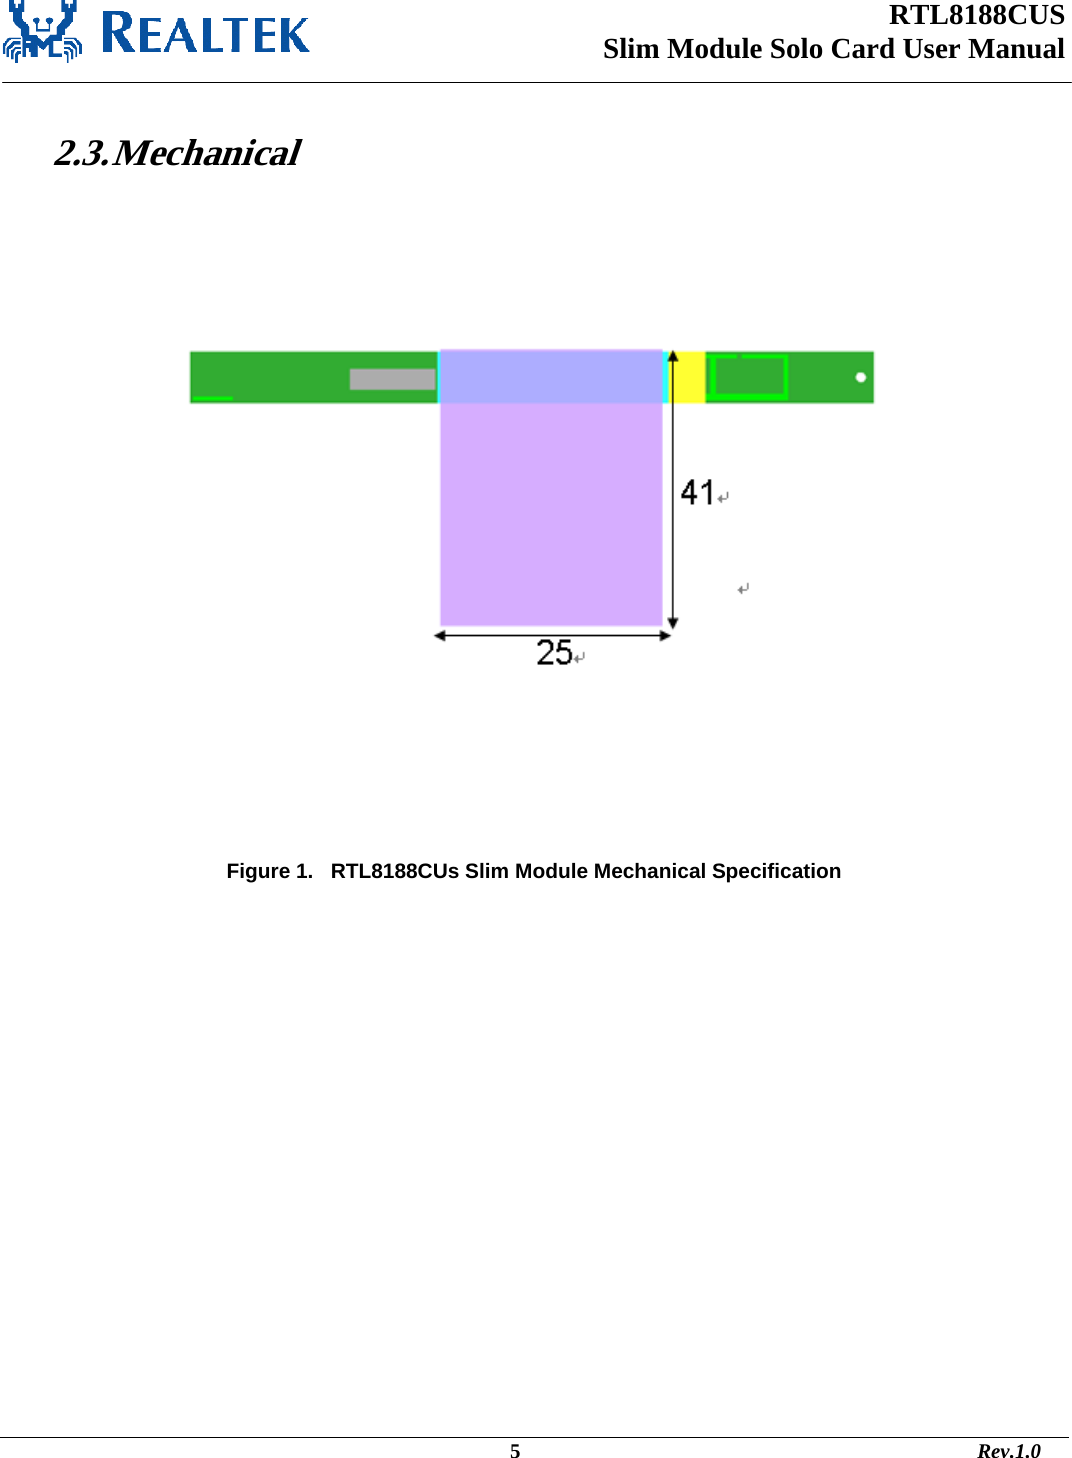 RTL8188CUS Slim Module Solo Card User Manual    2.3. Mechanical           Figure 1.   RTL8188CUs Slim Module Mechanical Specification                                                                                                                 5                                                                                       Rev.1.0 